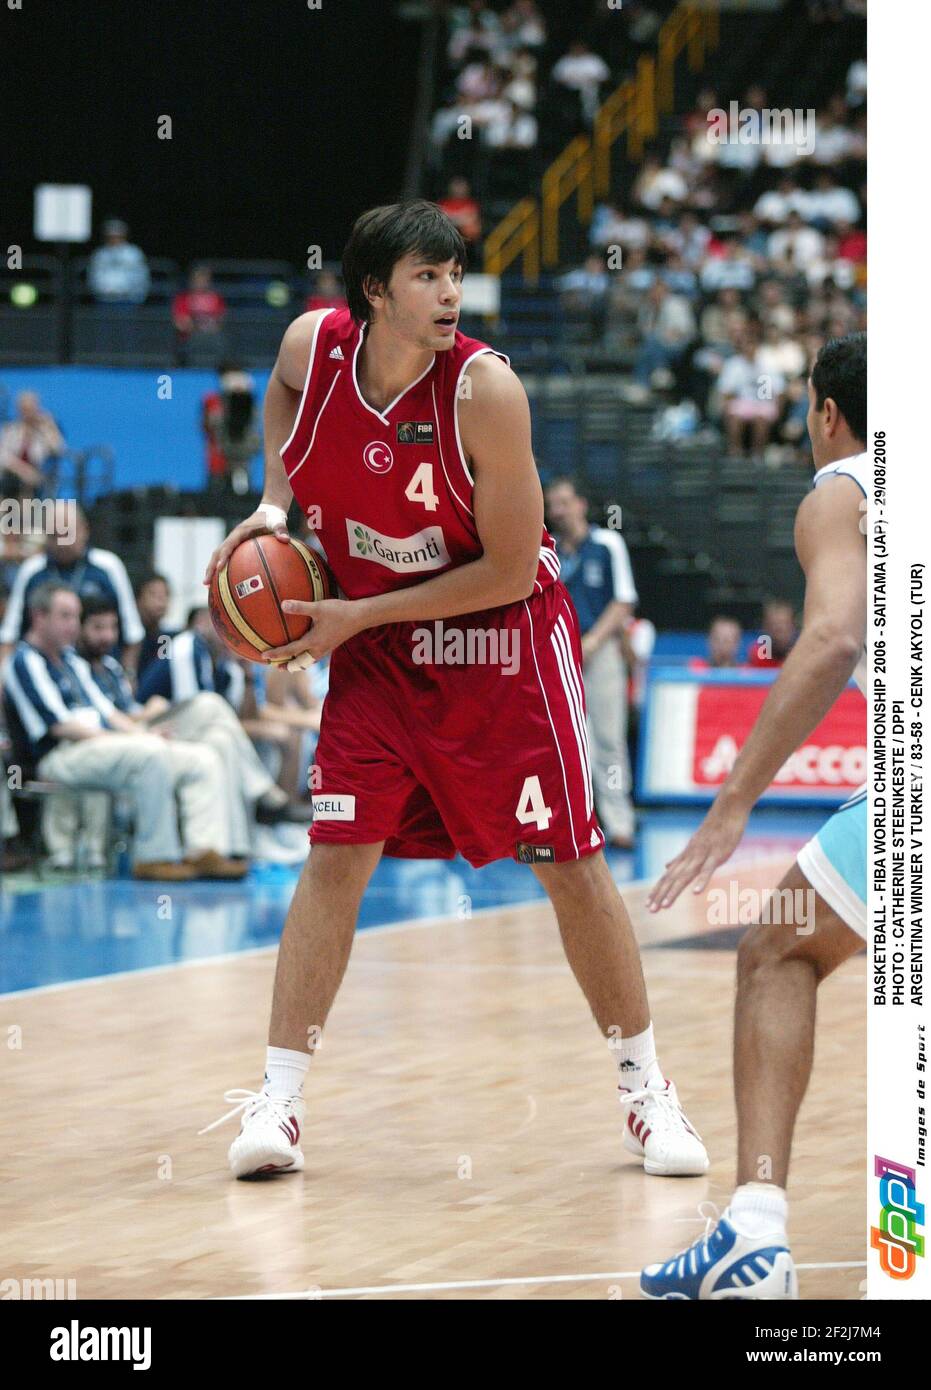 BASKETBALL - FIBA WORLD CHAMPIONSHIP 2006 - SAITAMA (JAP) - 29/08/2006  PHOTO : CATHERINE STEENKESTE / DPPI ARGENTINA WINNER V TURKEY / 83-58 -  CENK AKYOL (TUR Stock Photo - Alamy